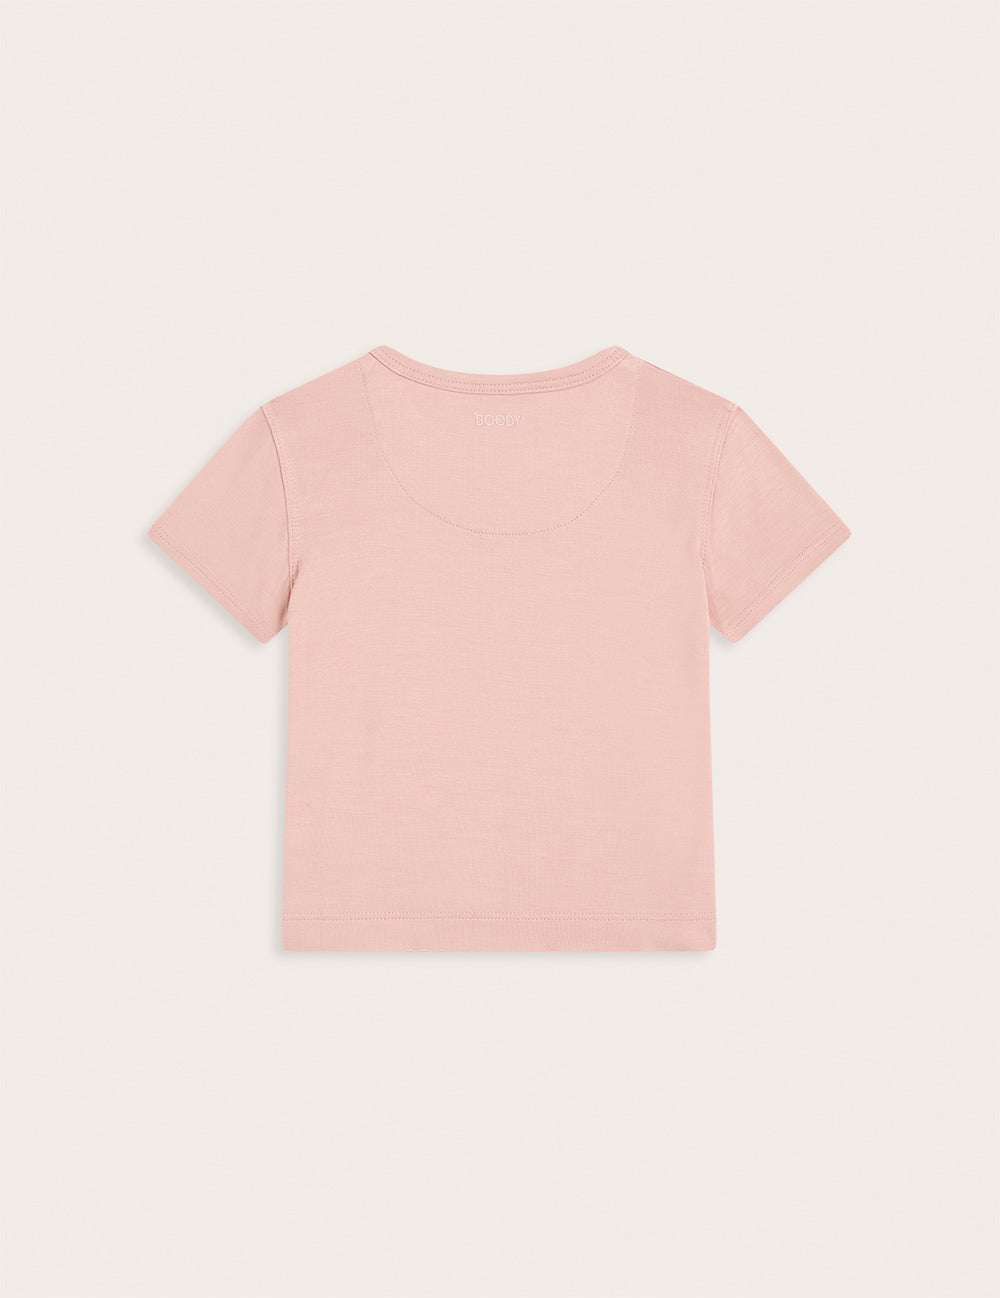 BB1004_DUSTY PINK_Baby Short Sleeve T-Shirt_3.jpg